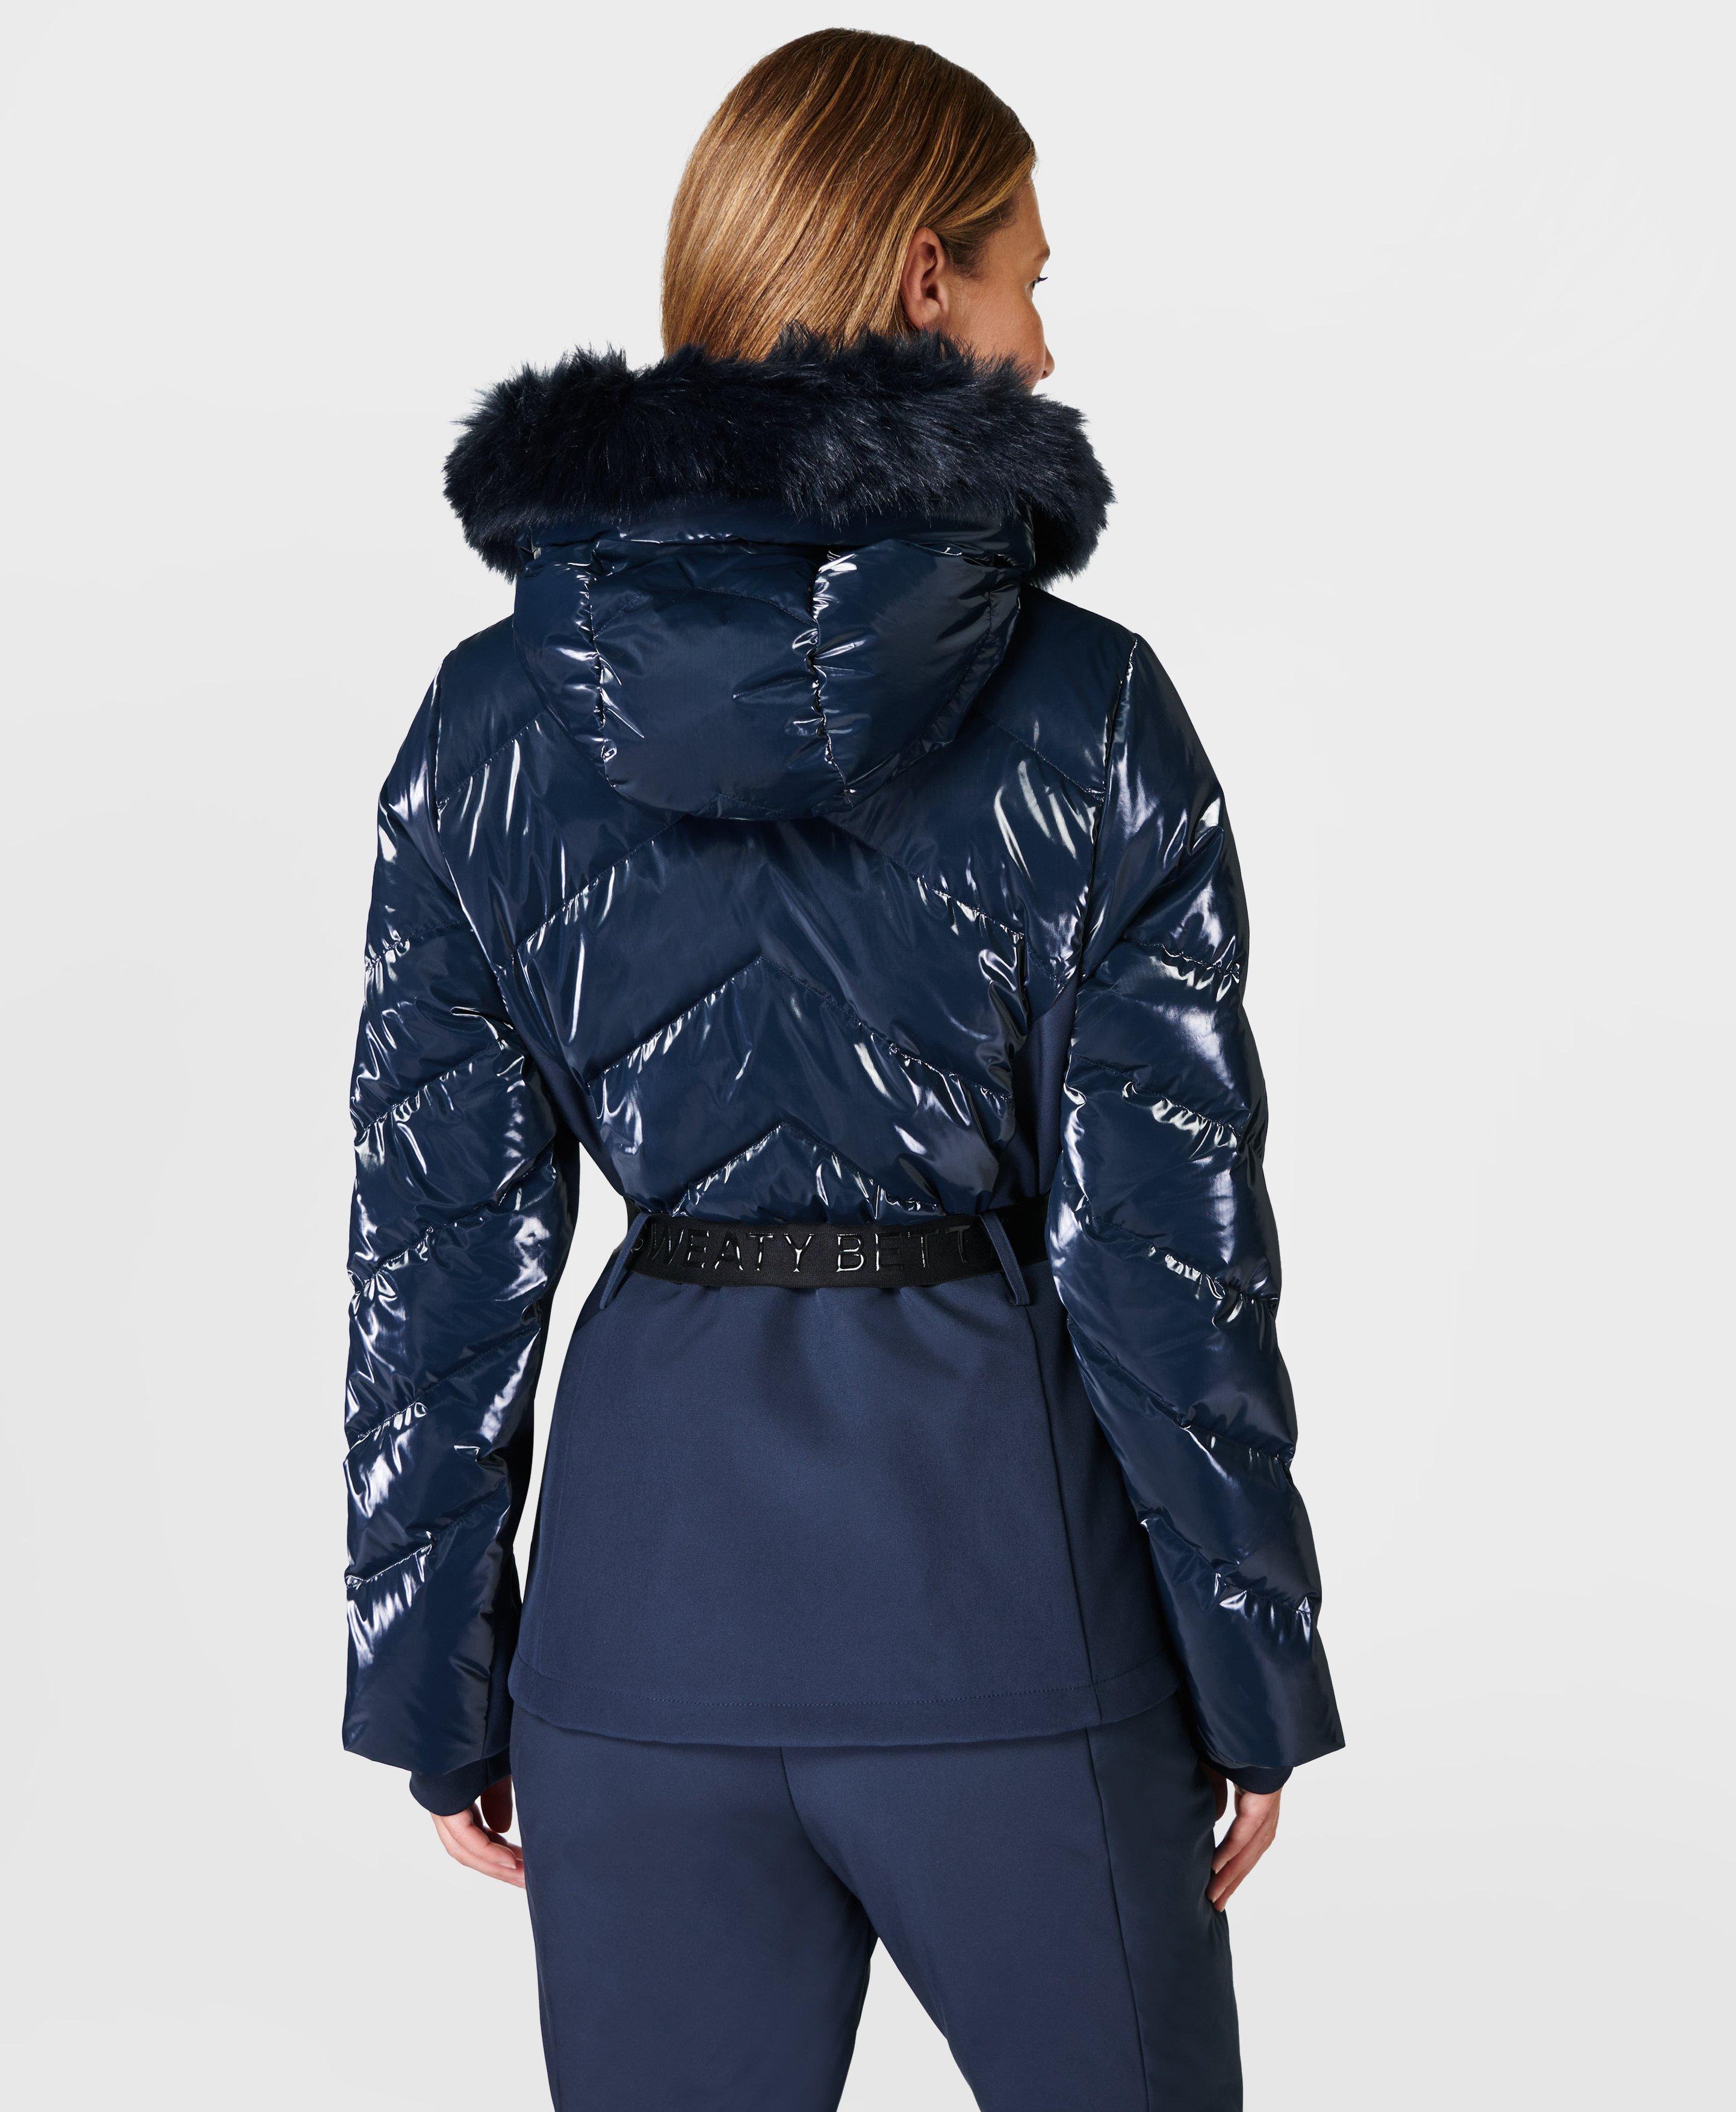 Glacier Ski Jacket - Navy Blue, Women's Ski Clothes